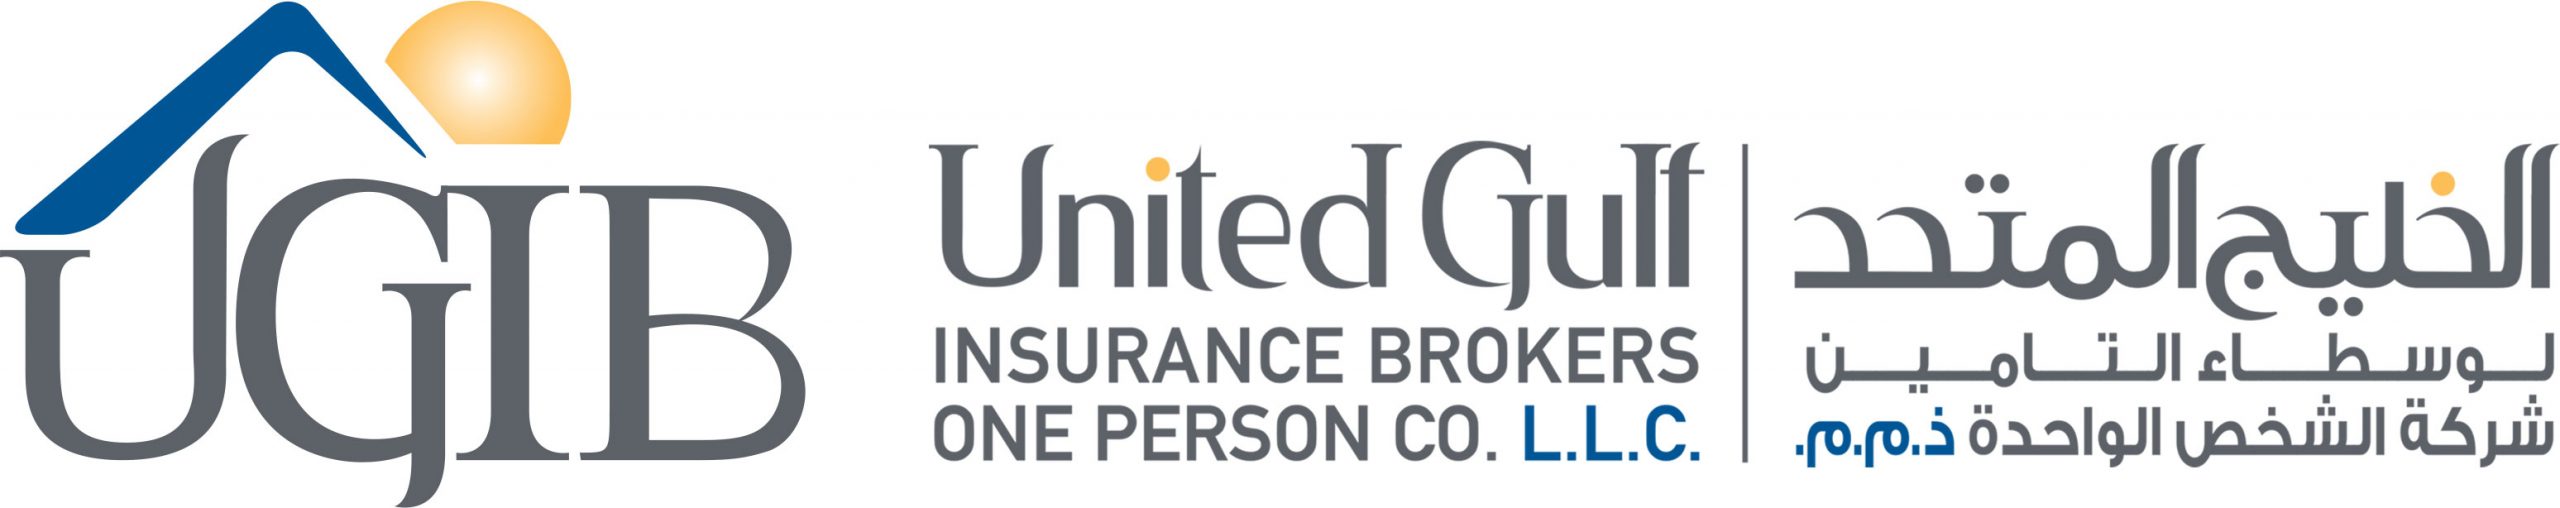 United Gulf Insurance Brokers One Person Company LLC Dubai | UAE Best Insurance Broker